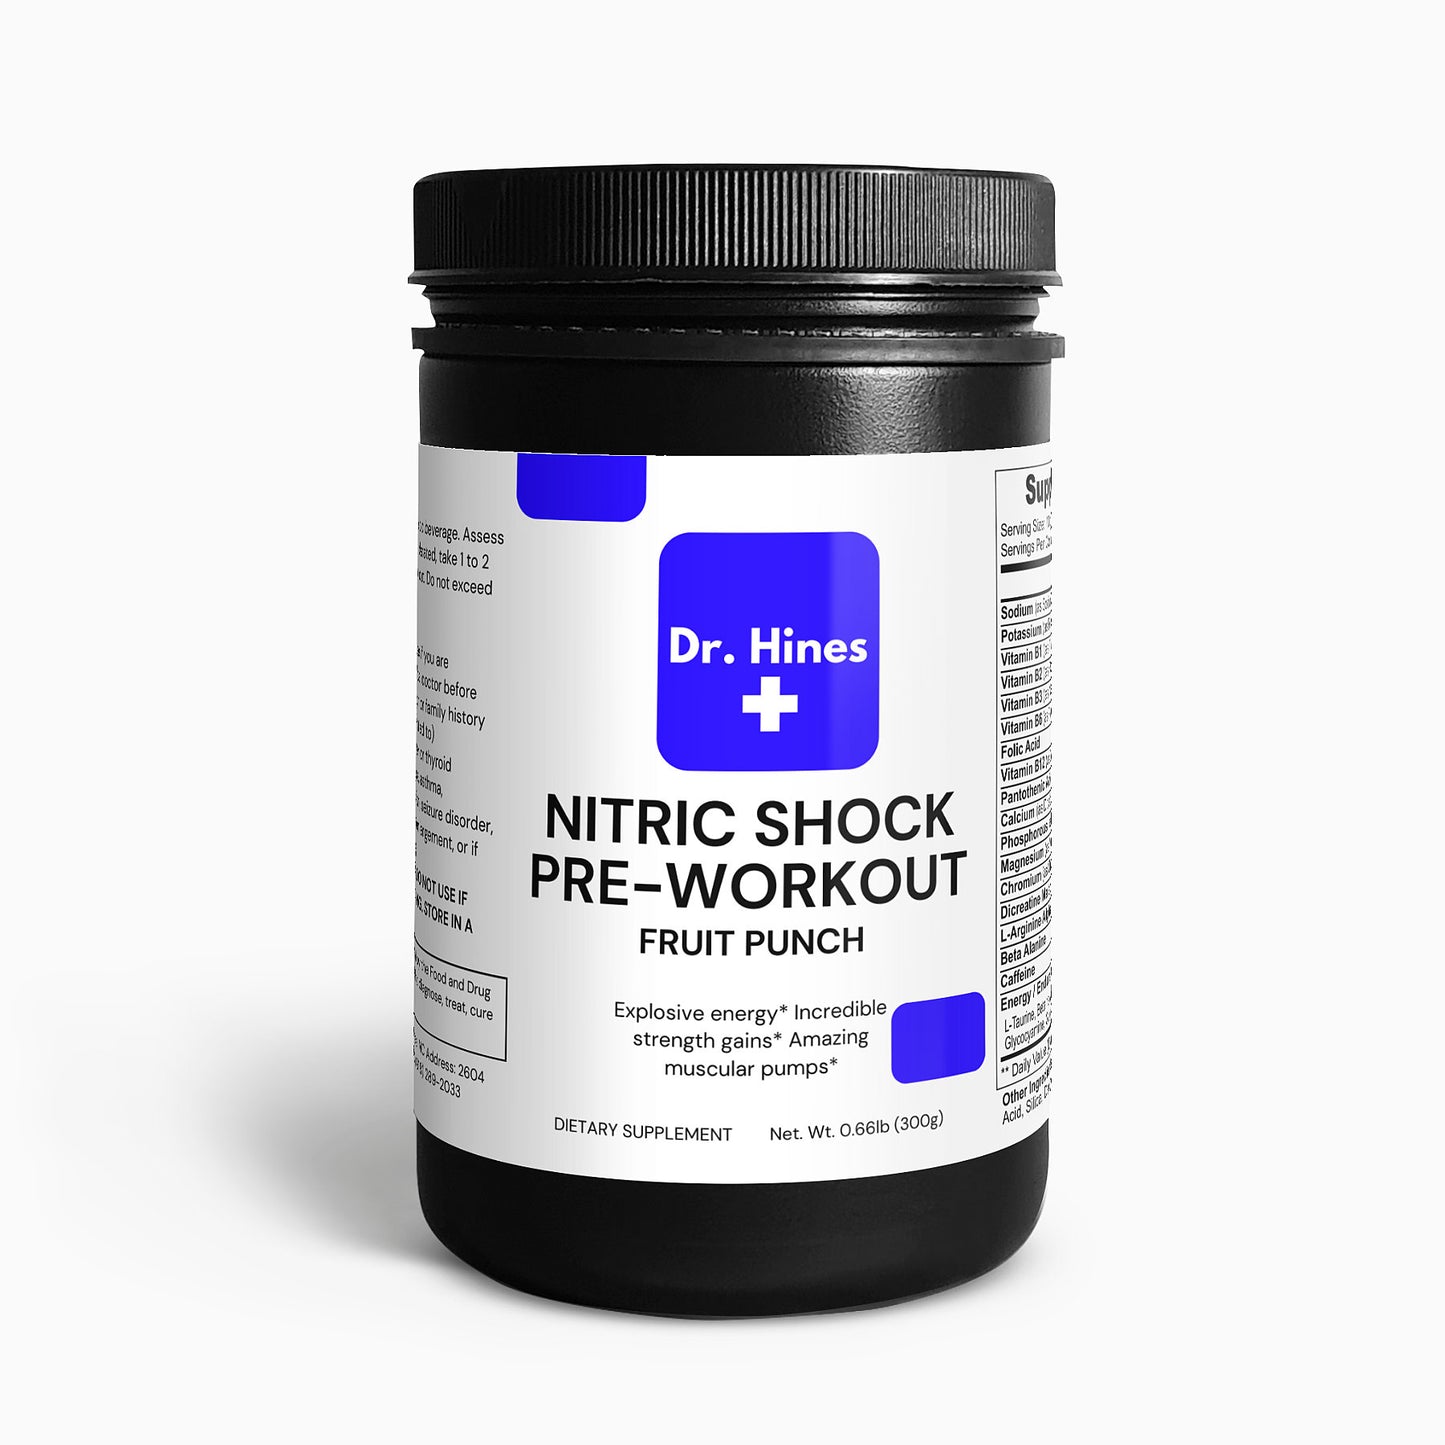 Nitric Shock Pre-Workout Powder (Fruit Punch)